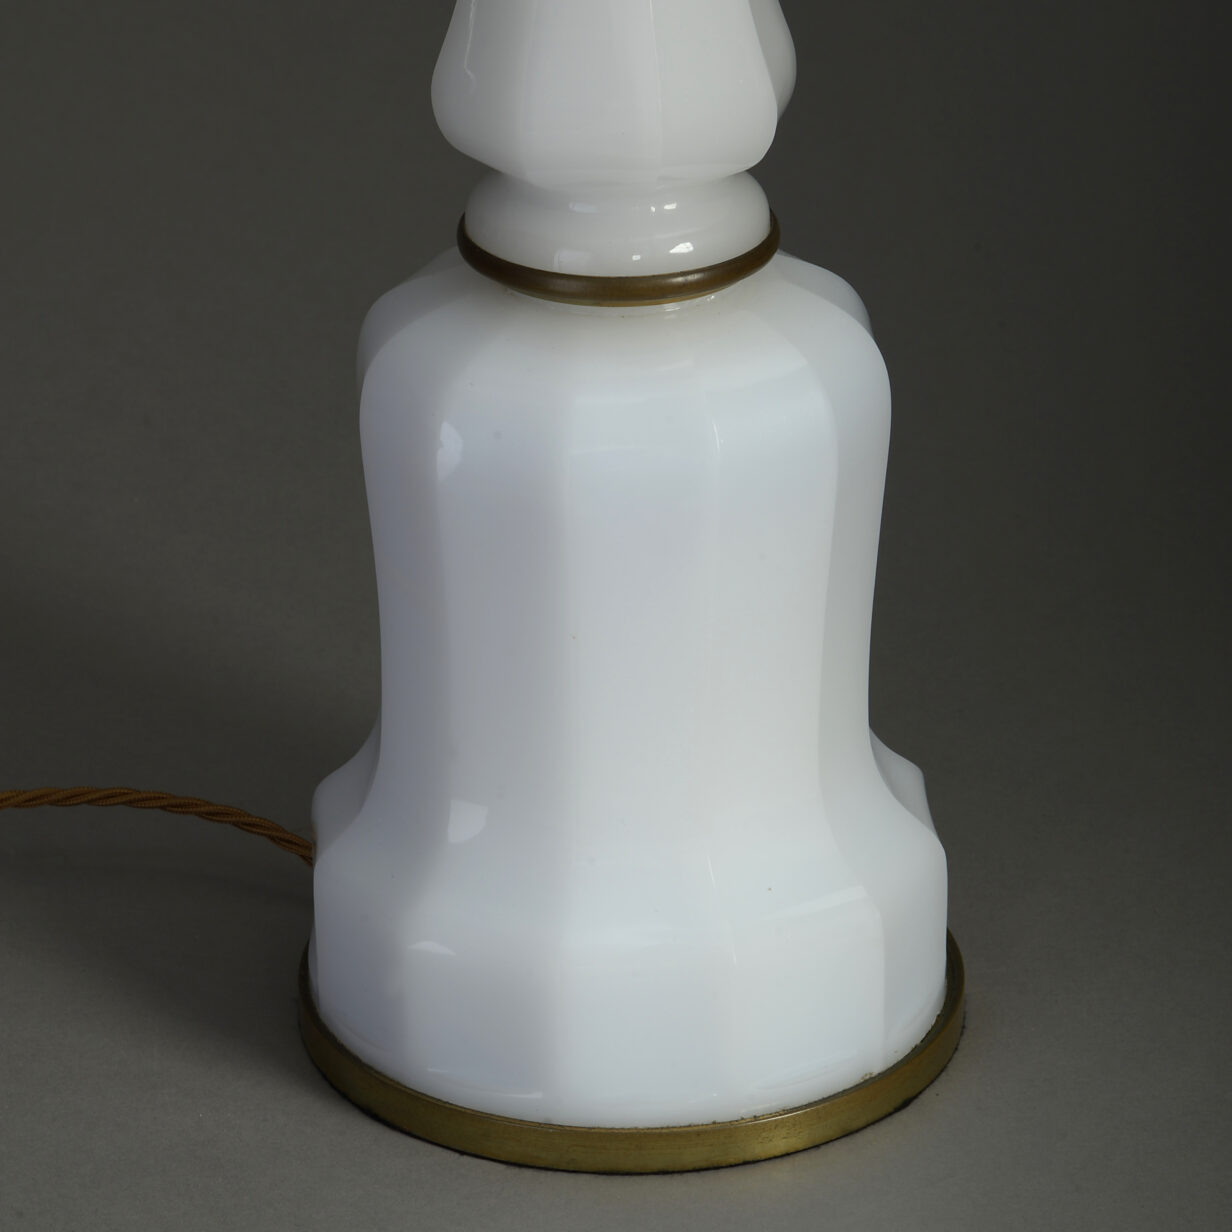 White opaline glass lamp